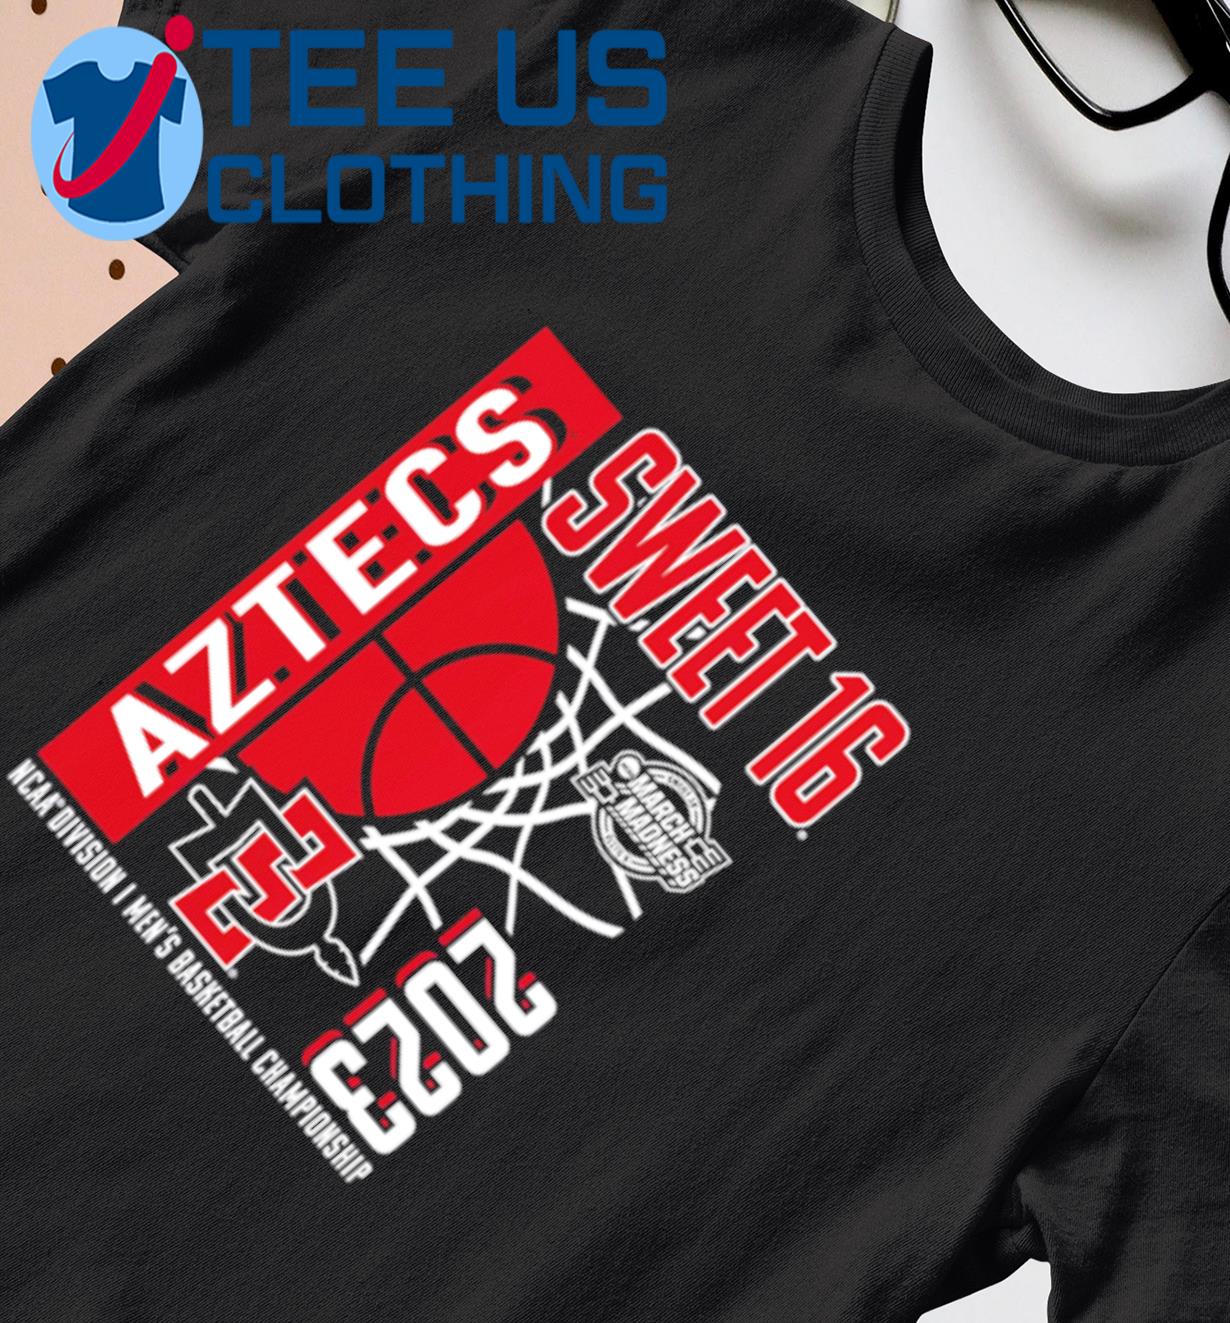 San Diego State Aztecs 2023 NCAA Men's Basketball Tournament March Madness Sweet 16 shirt